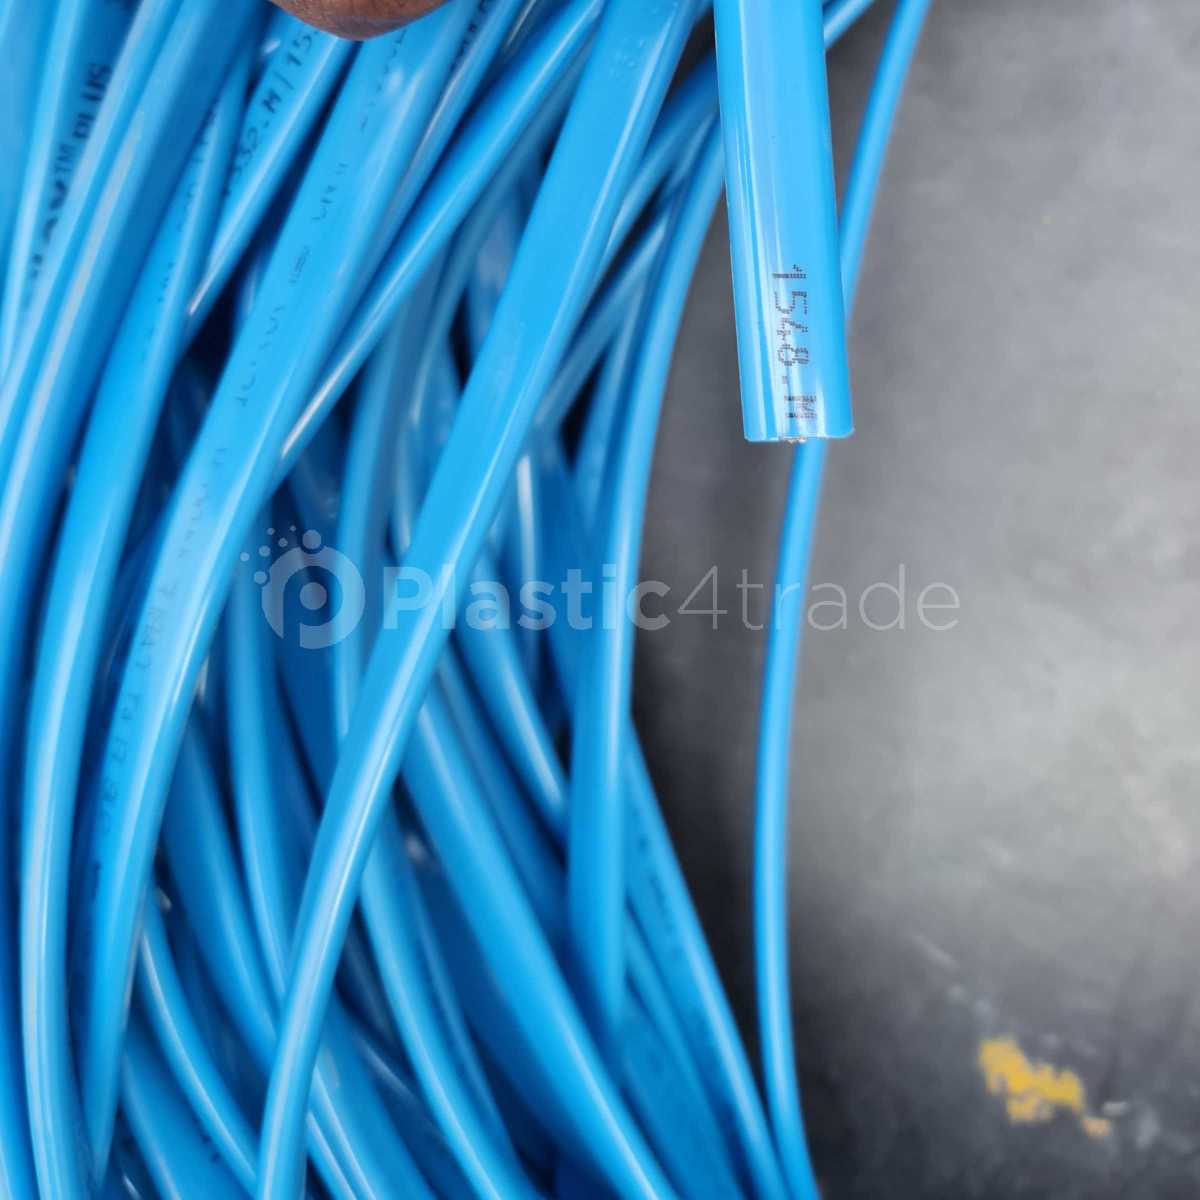 PET FLAKES HOT WASH PVC Resin Cable gujarat india Plastic4trade